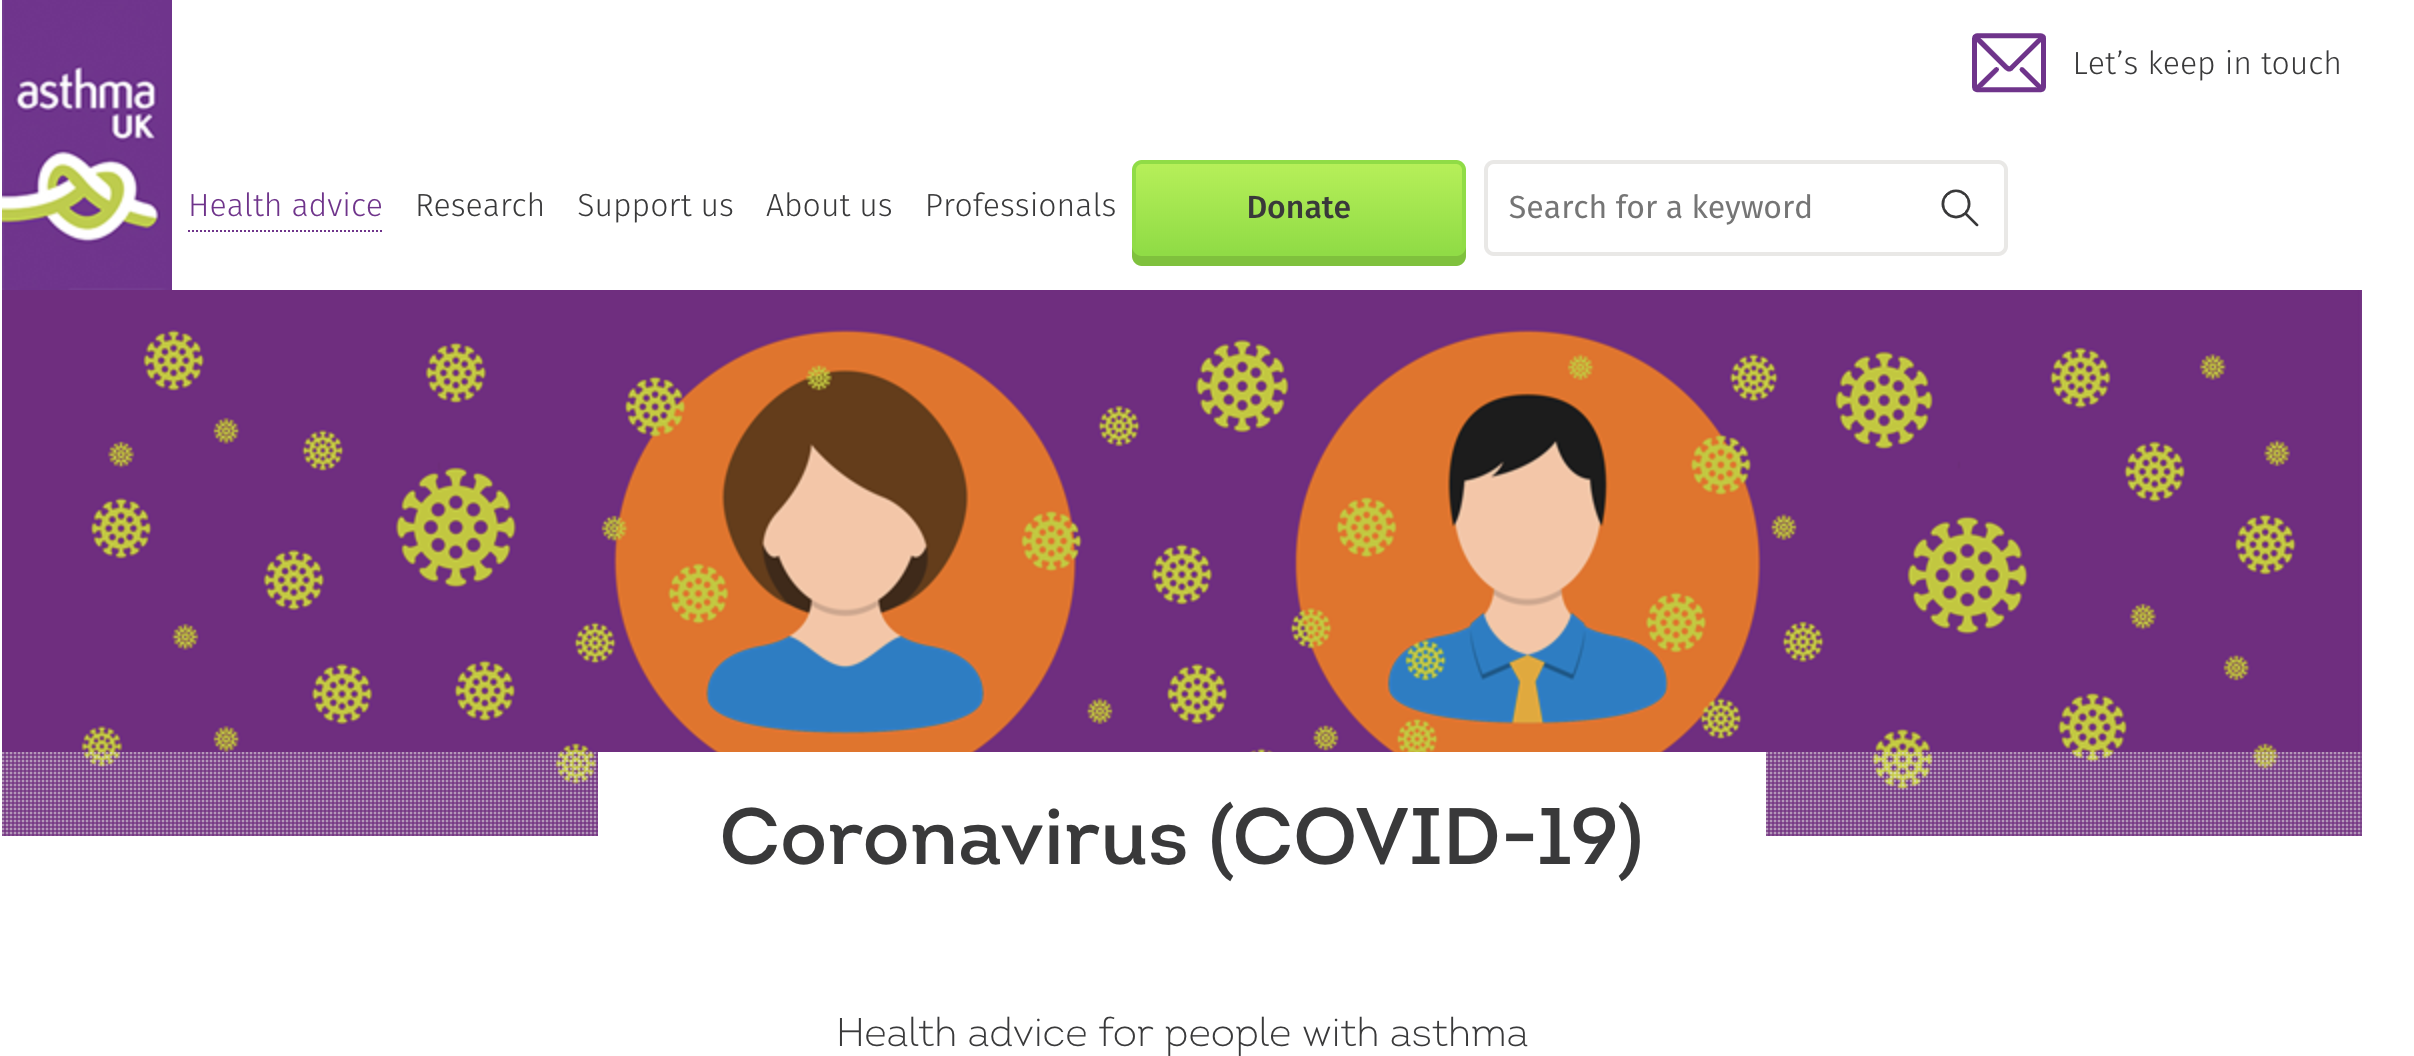 Asthma Advice #COVID-19 featured image